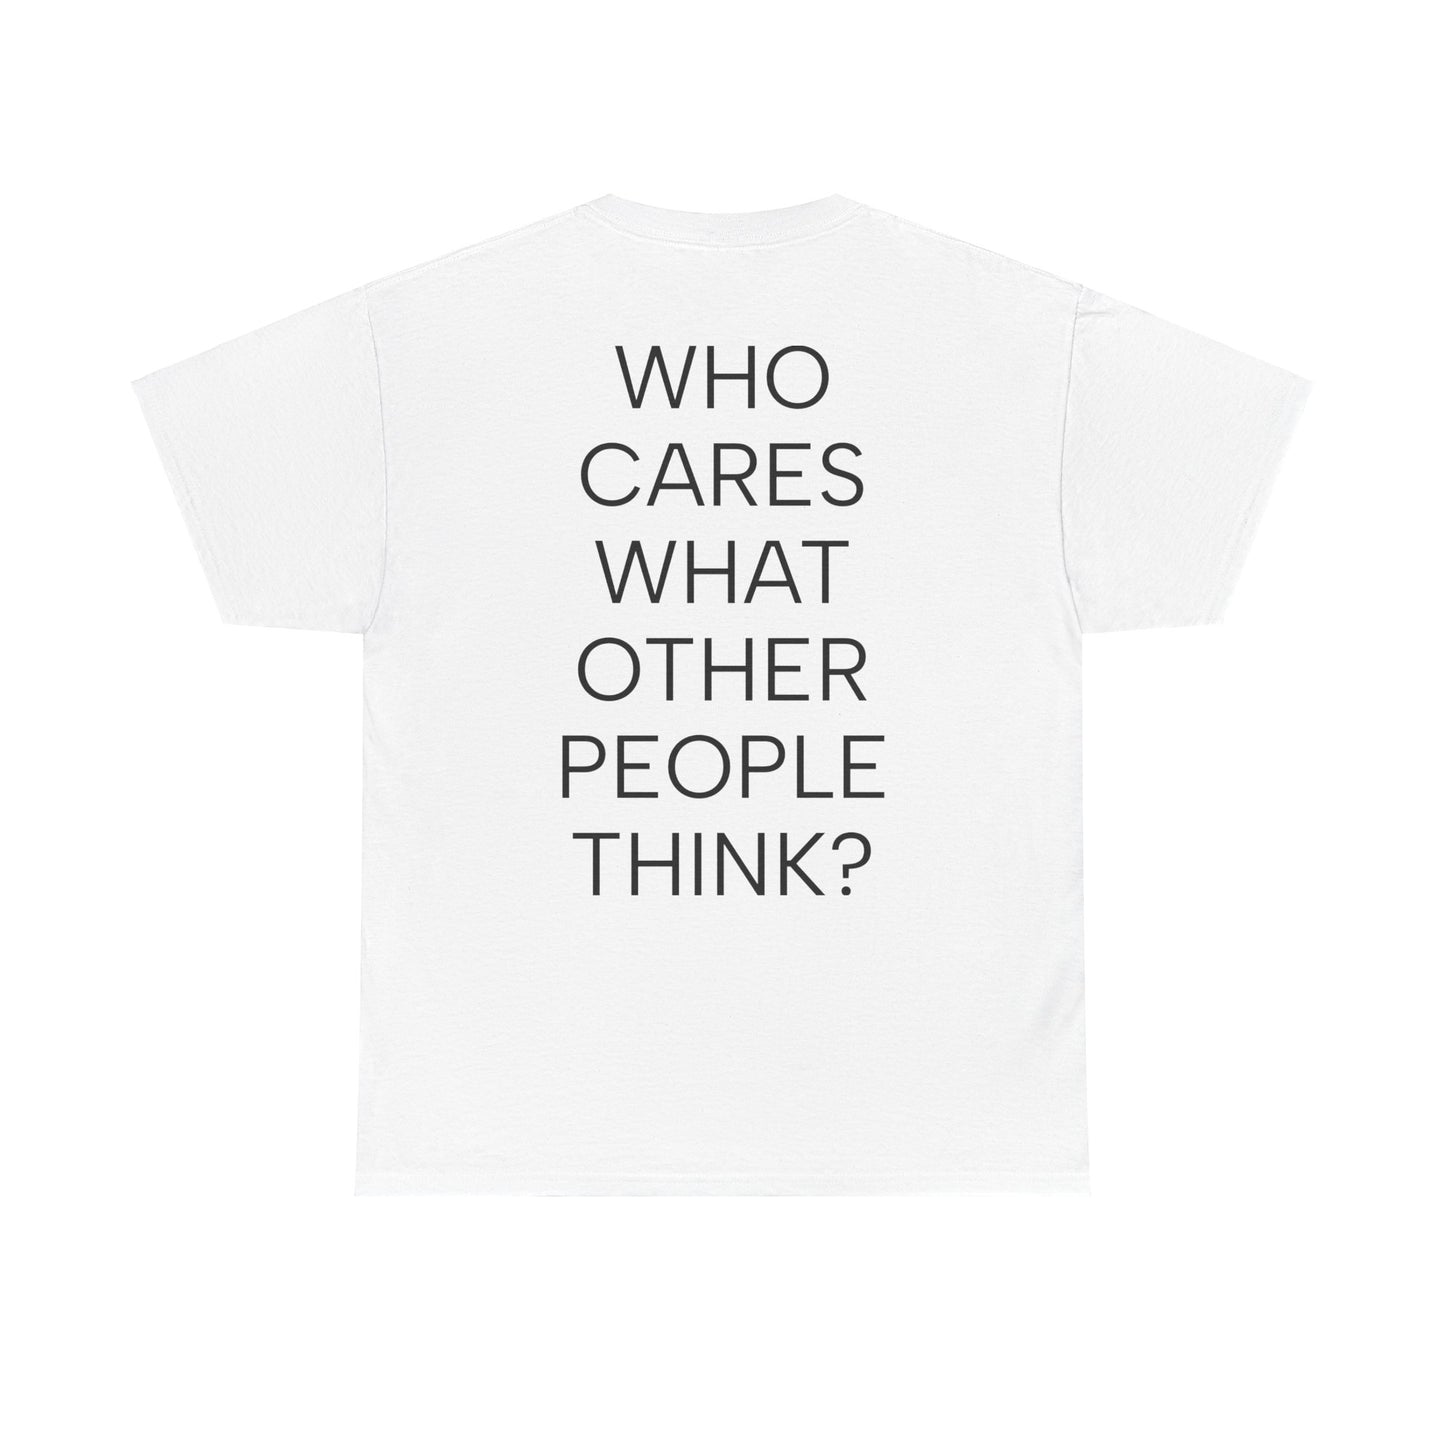 WHO CARES T-shirt UNISEX